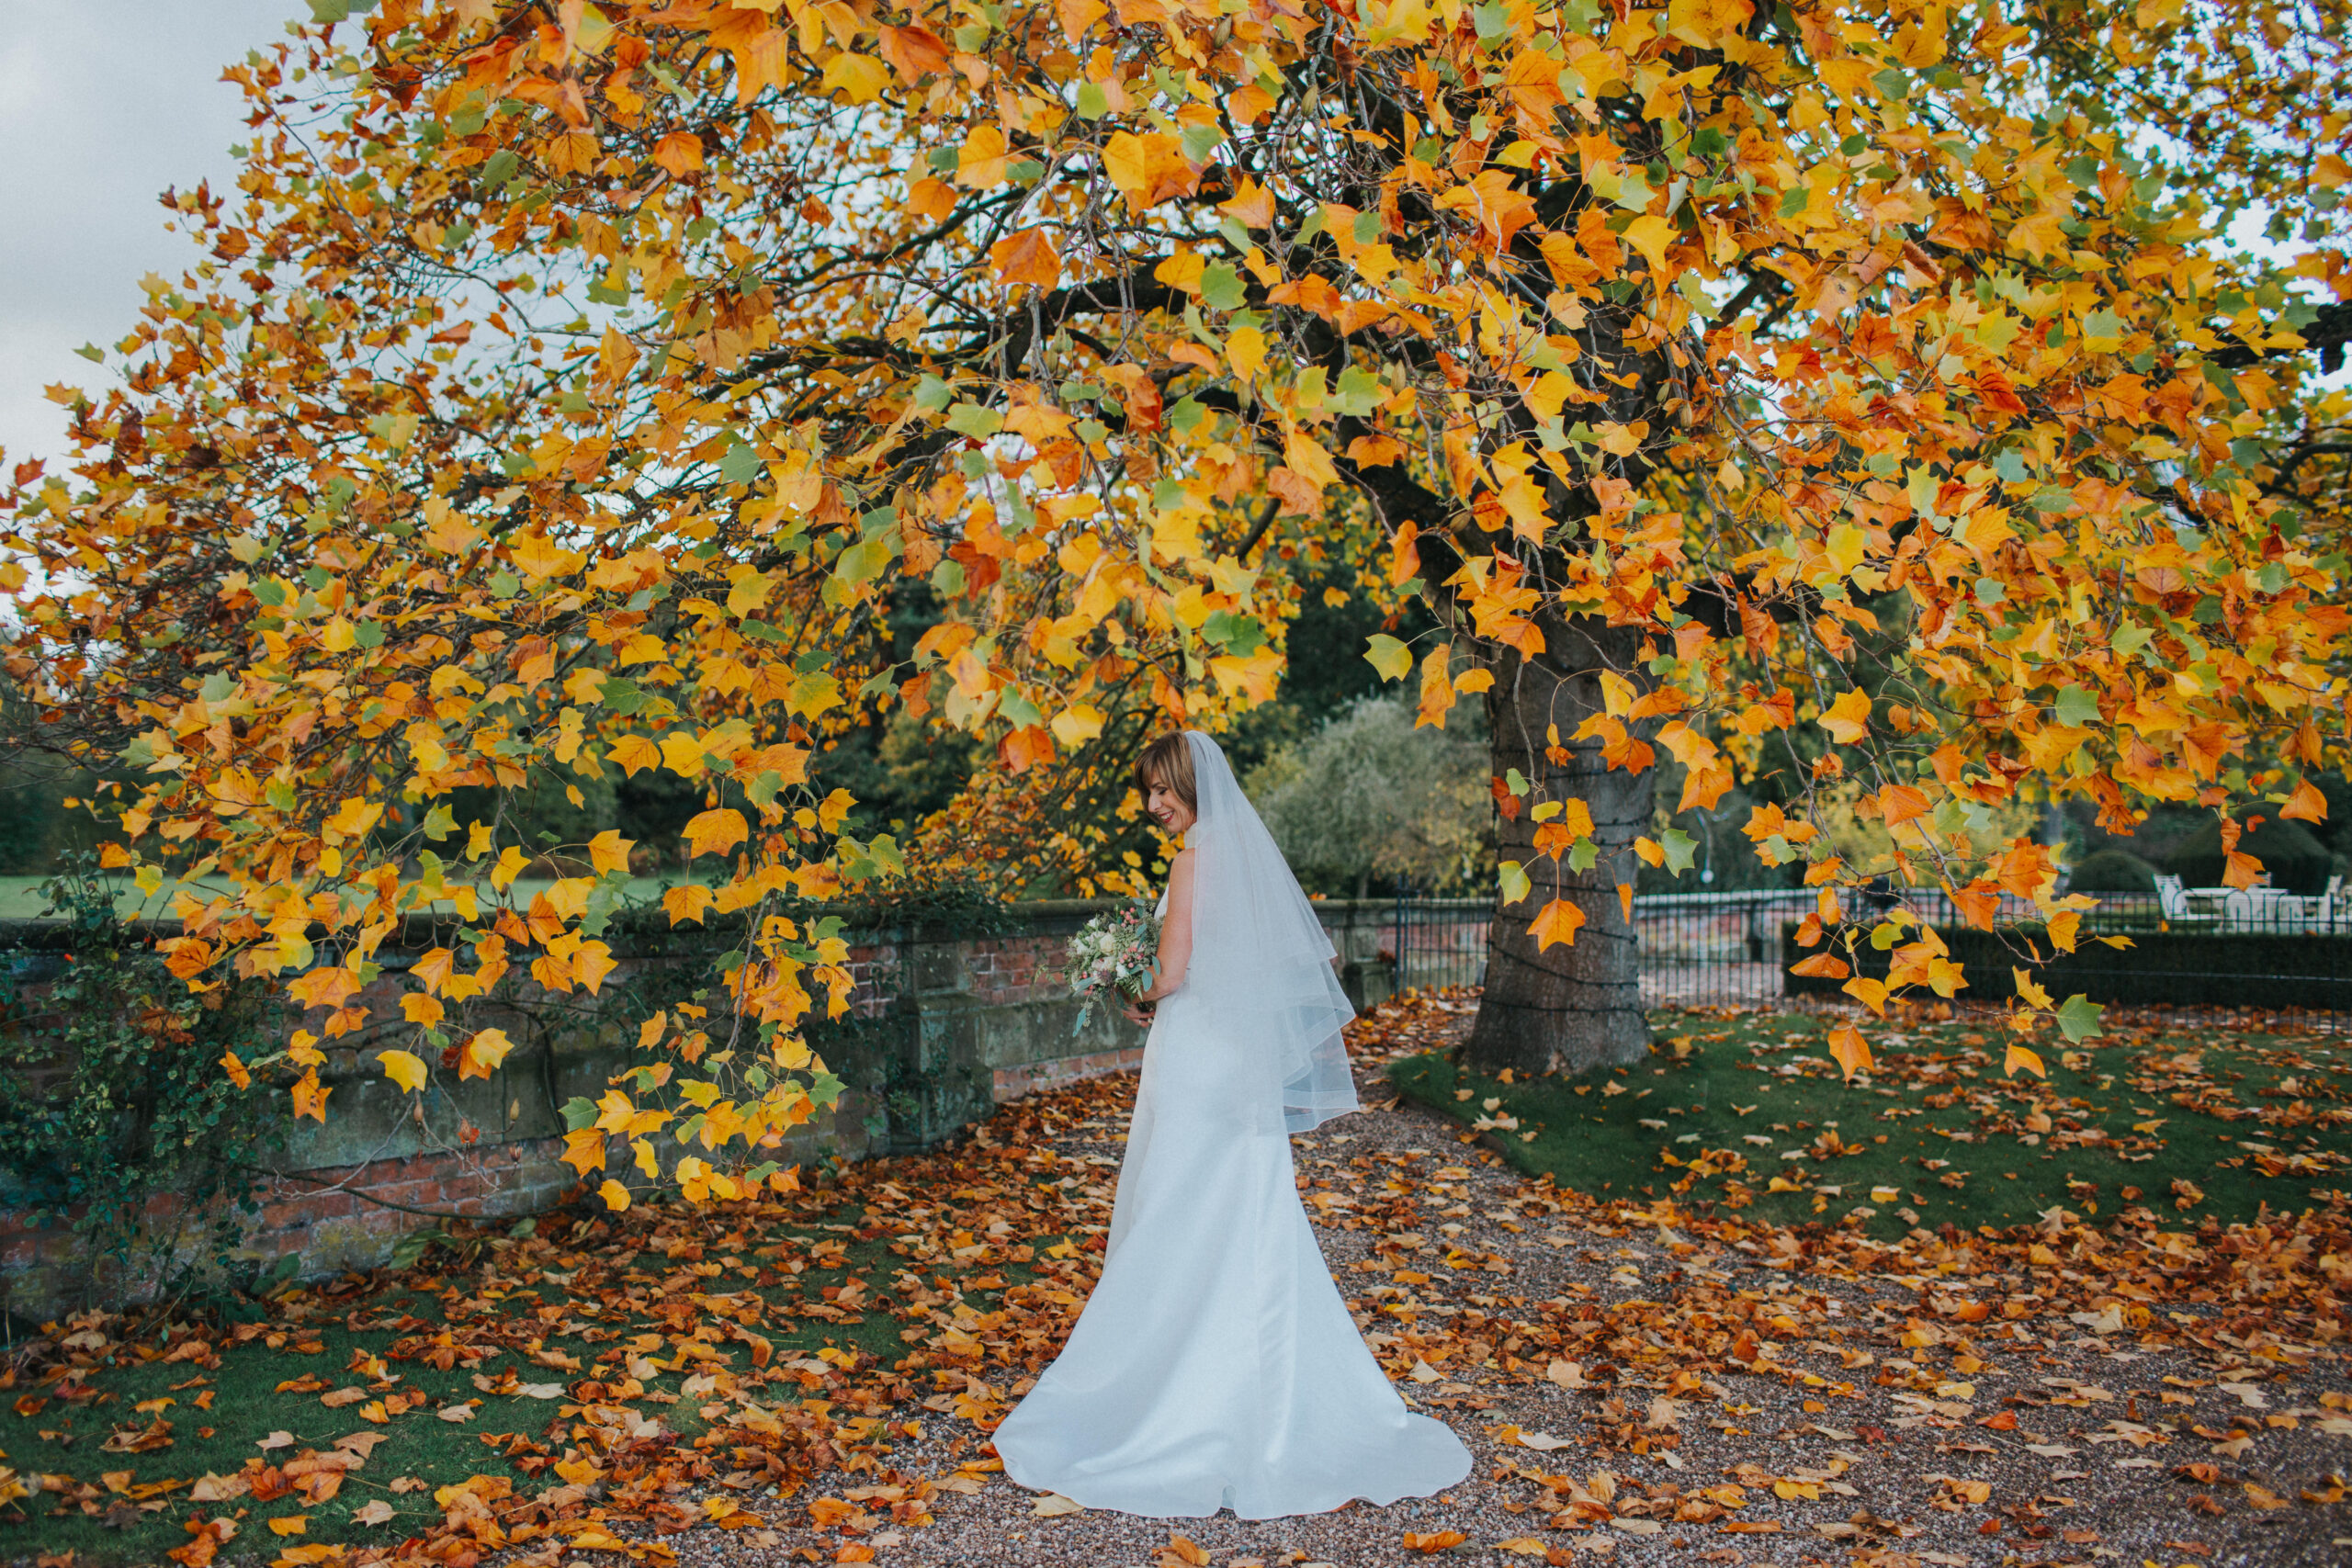 Bridal party enjoys the crisp fall air at Iscoyd Park in Shropshire